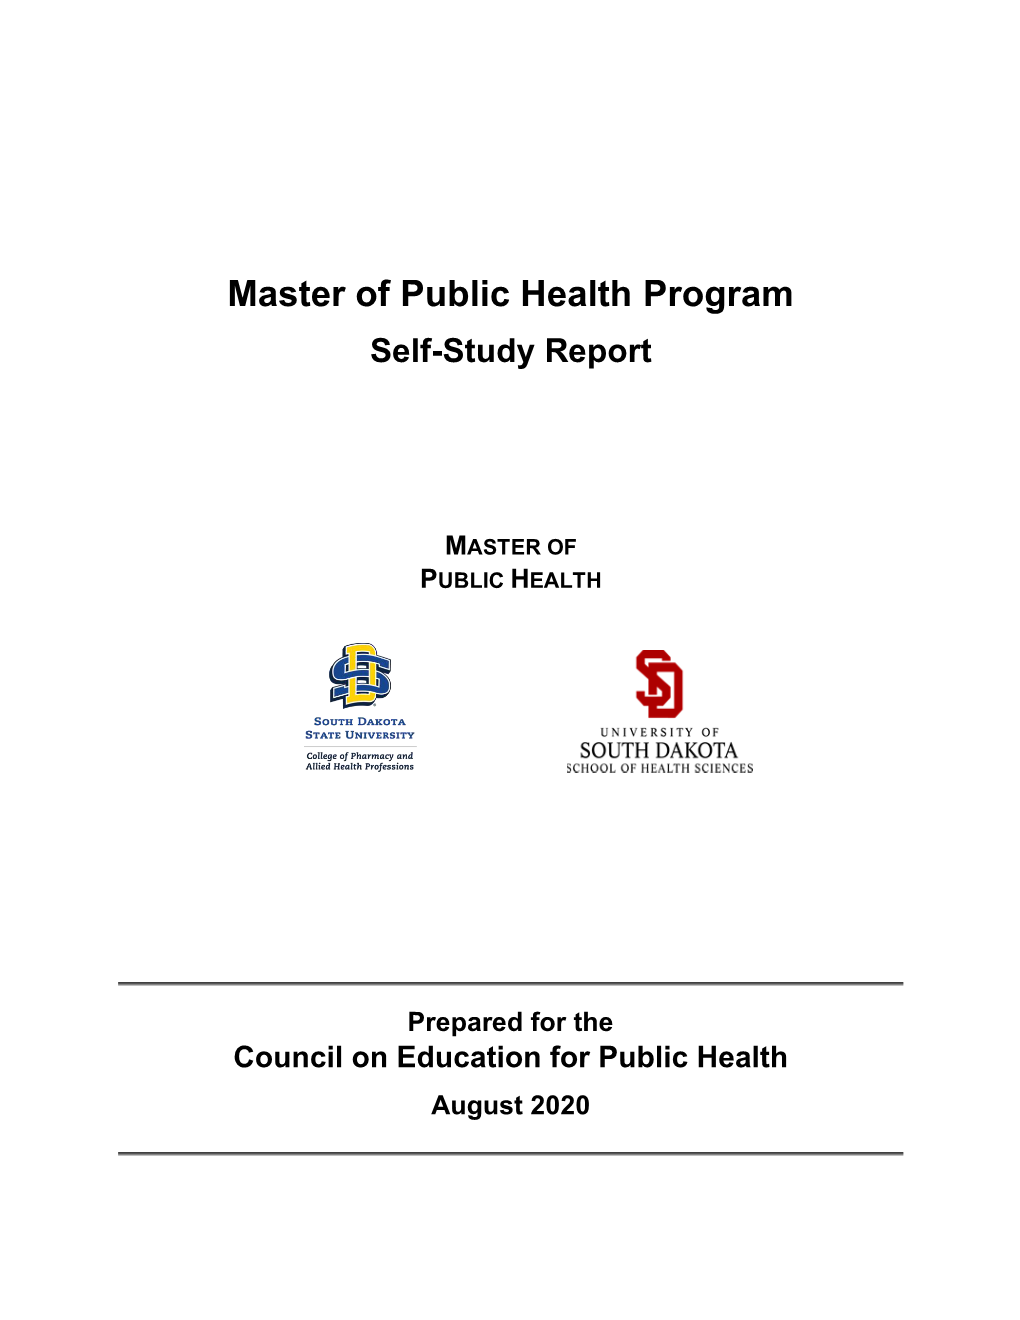 Master of Public Health Program Self-Study Report